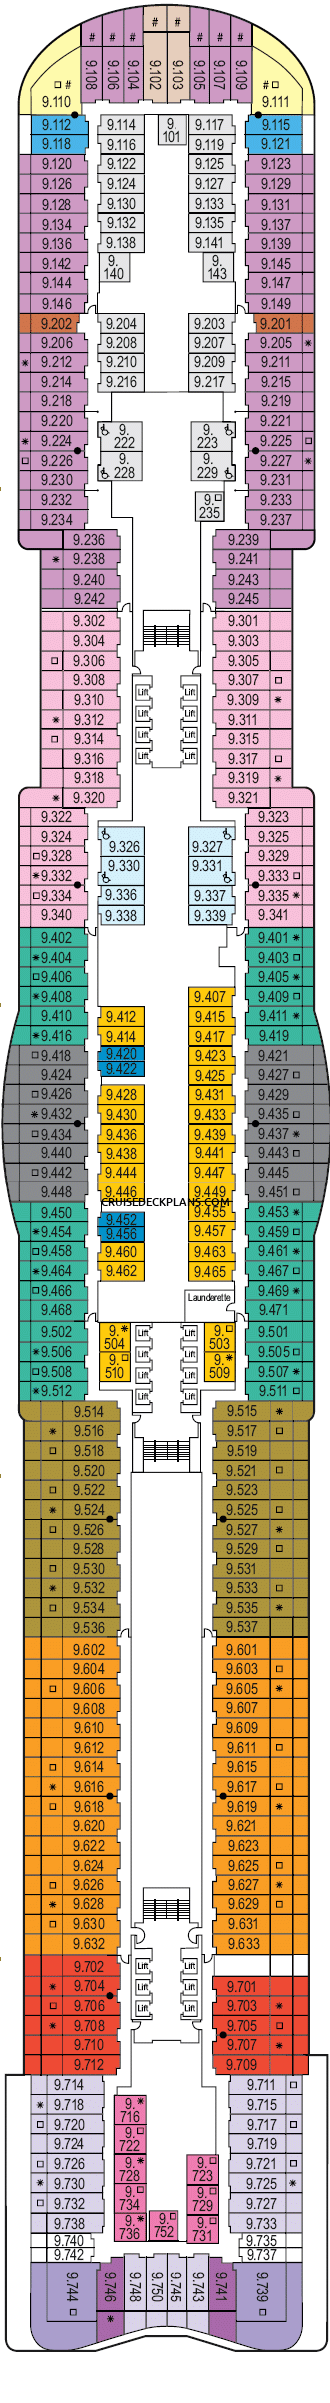 plan of iona cruise ship